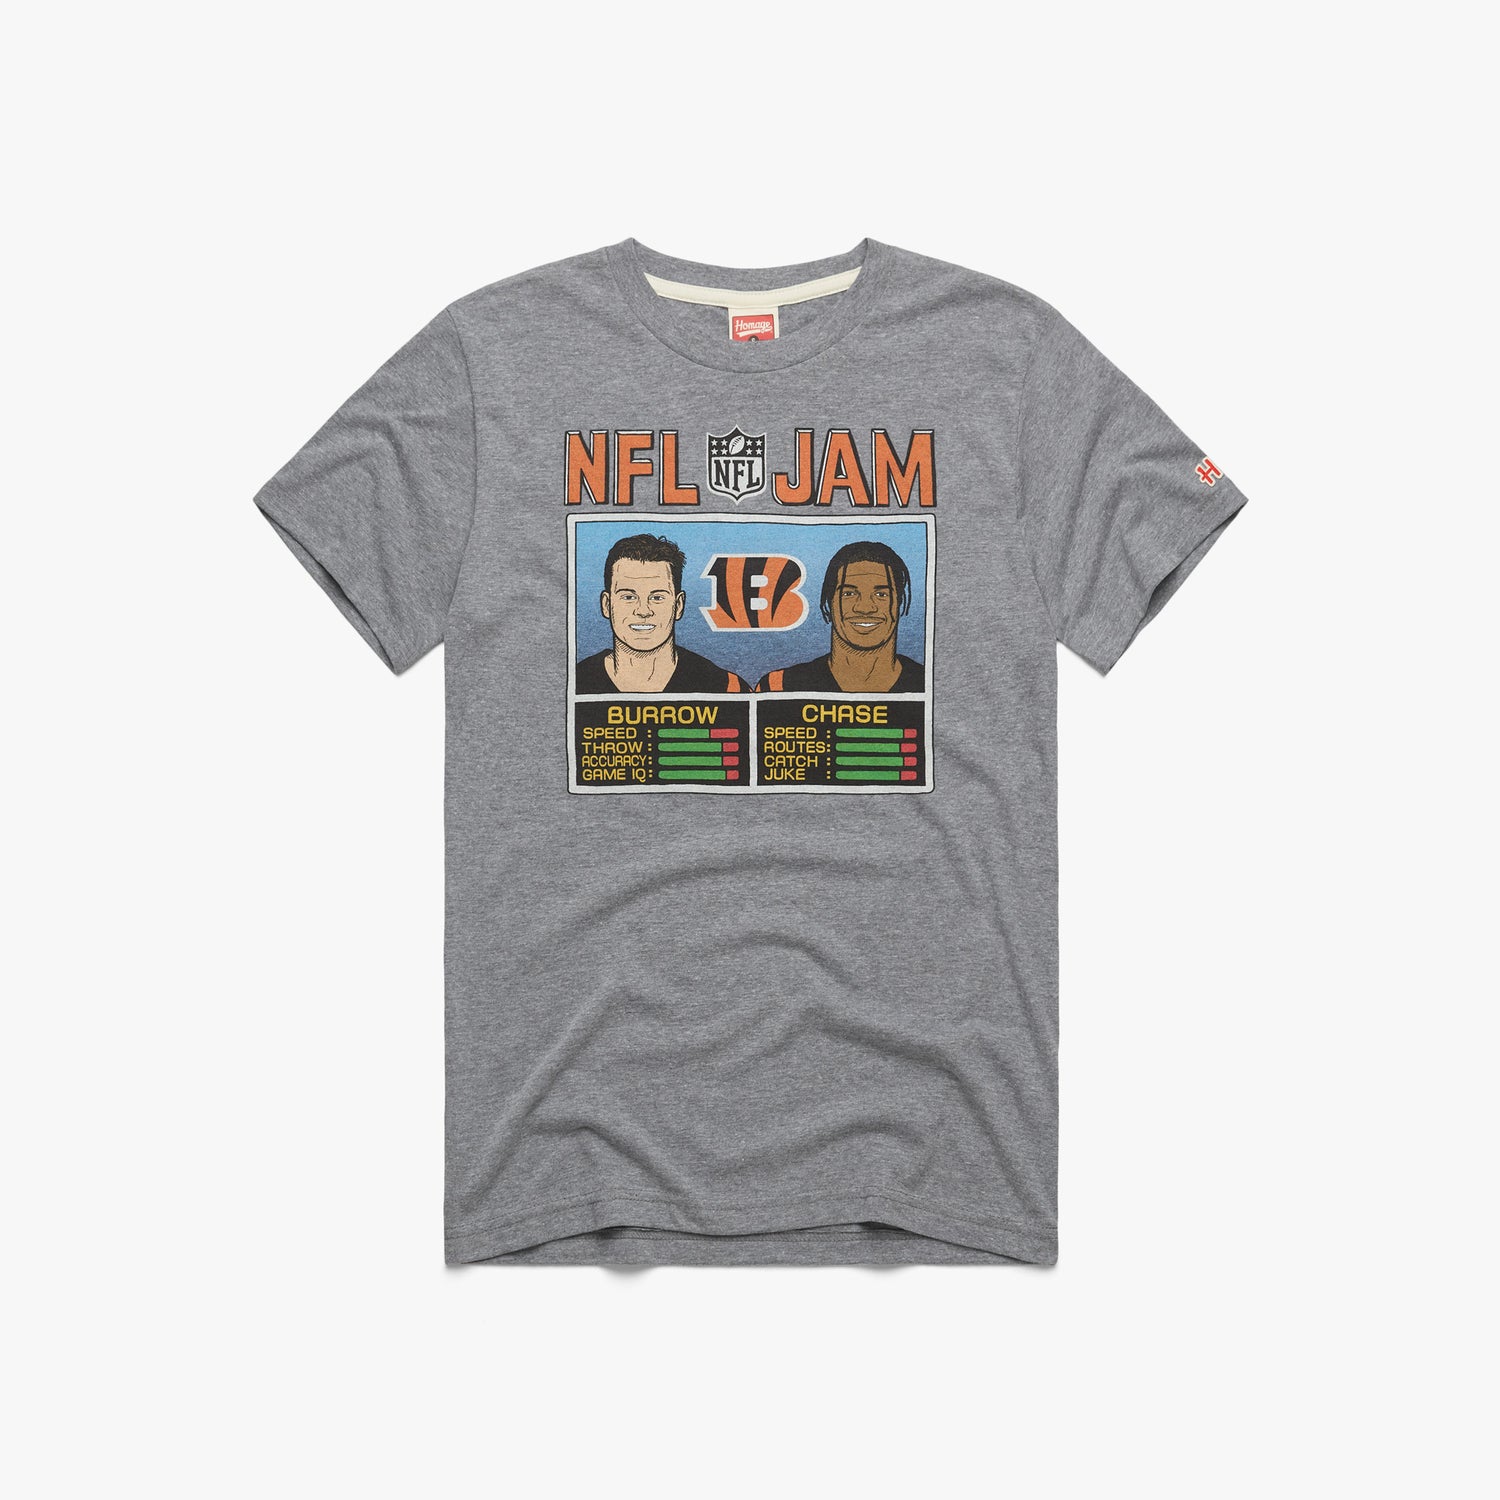 Cincinnati Bengals Super Bowl Joe Burrow Jamarr Chase Shirt - High-Quality  Printed Brand